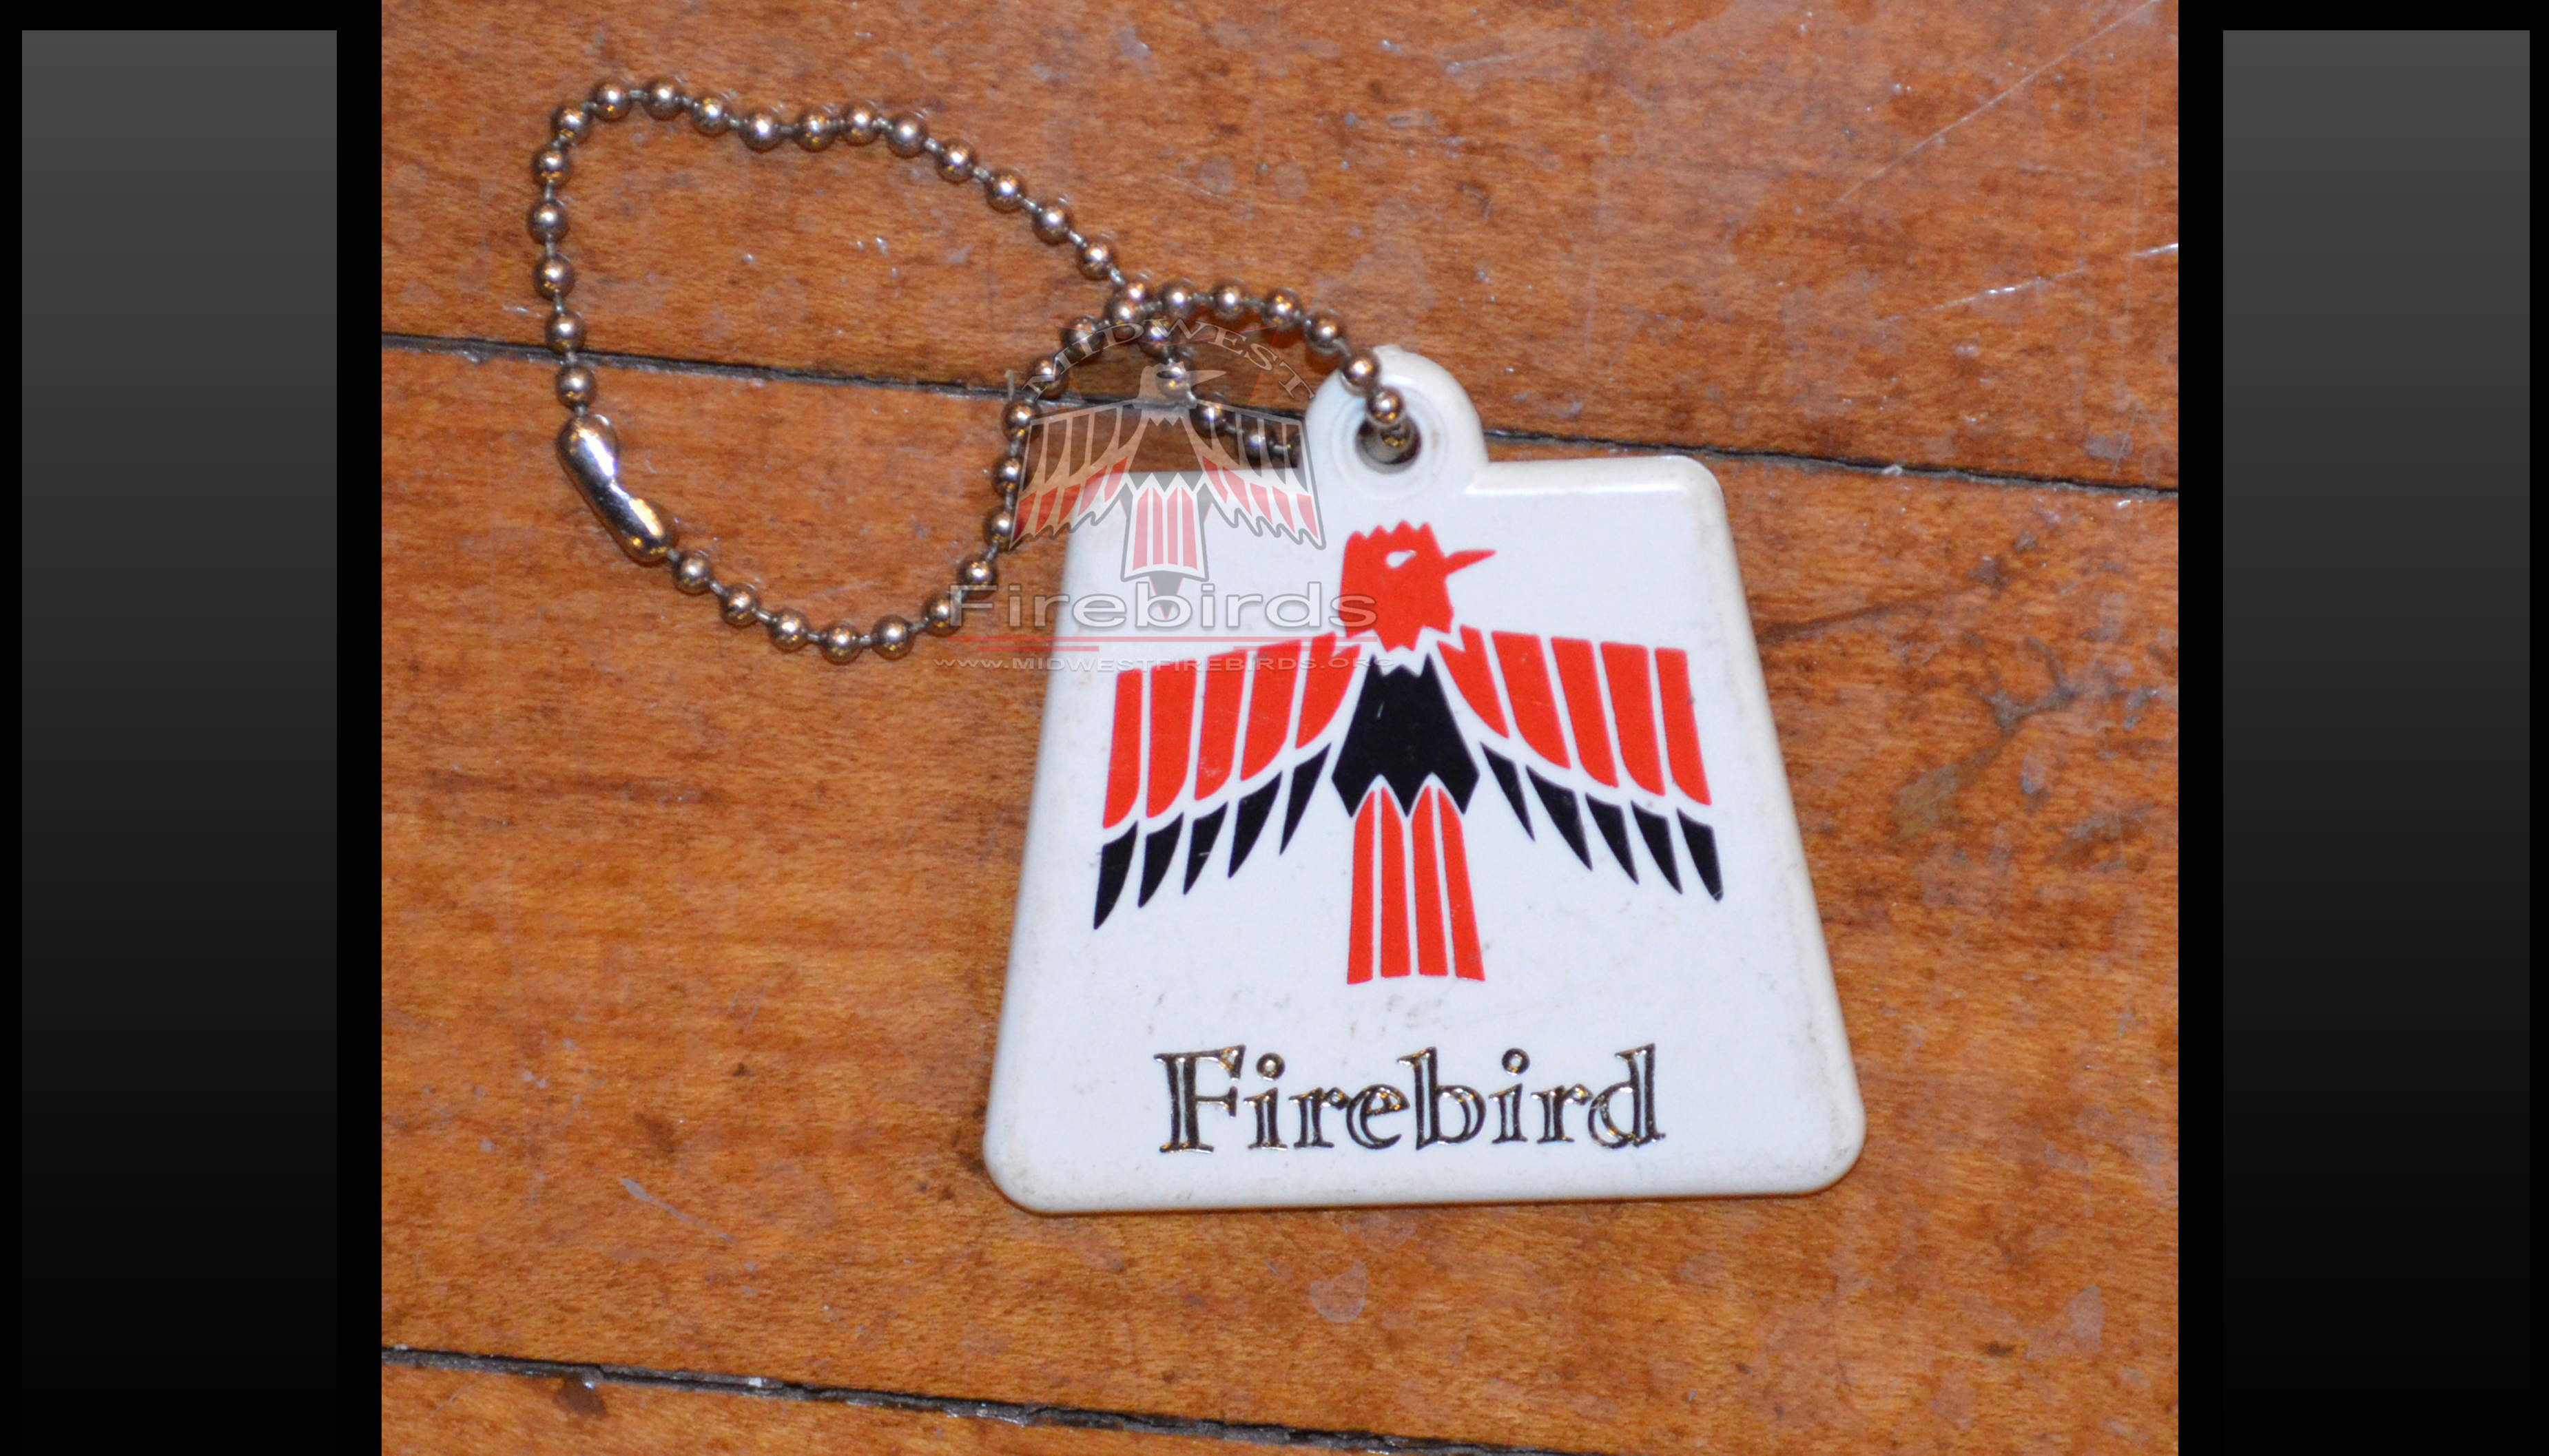 Vintage dealer promo Pontiac Firebird keychain.